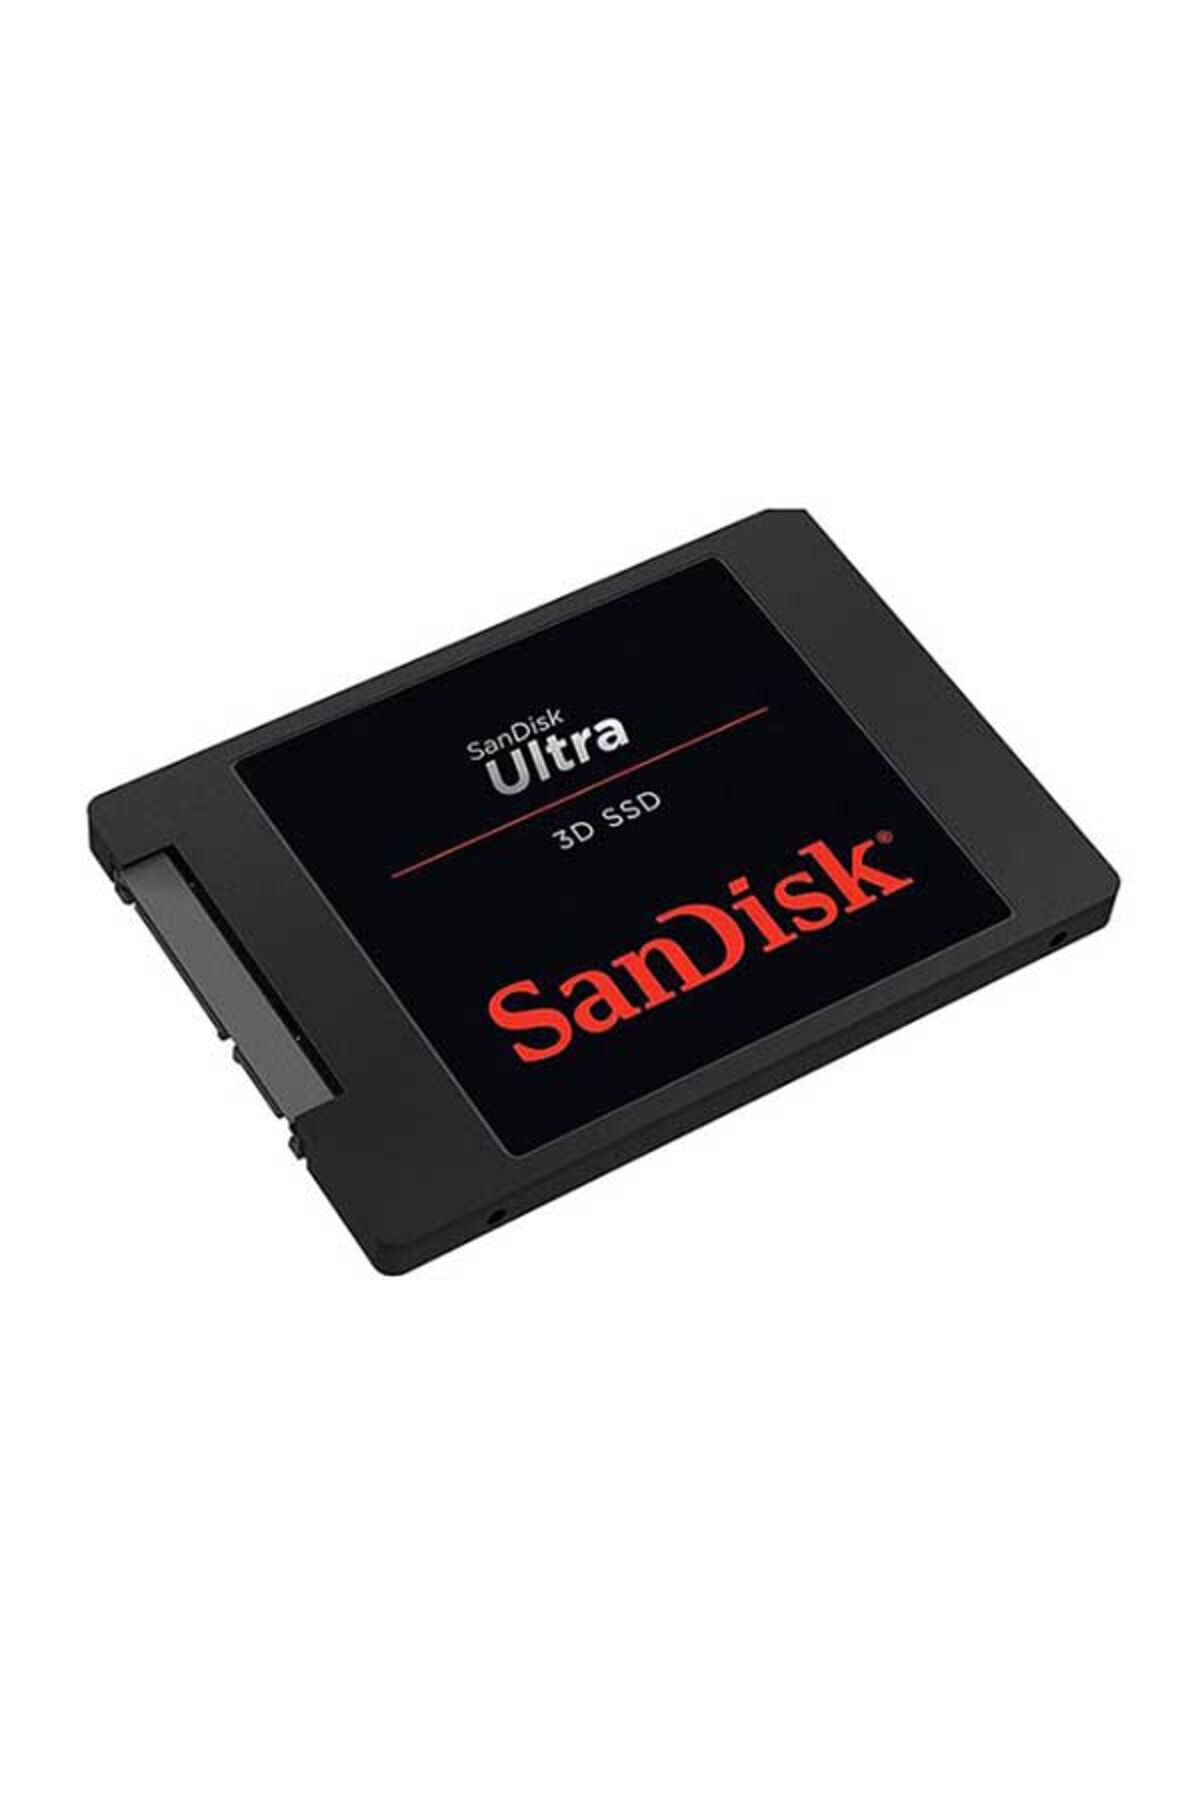 Sandisk Ultra 3D 500GB 560MB-530MB/s Sata 3 2.5" SSD (SDSSDH3-500G-G25)